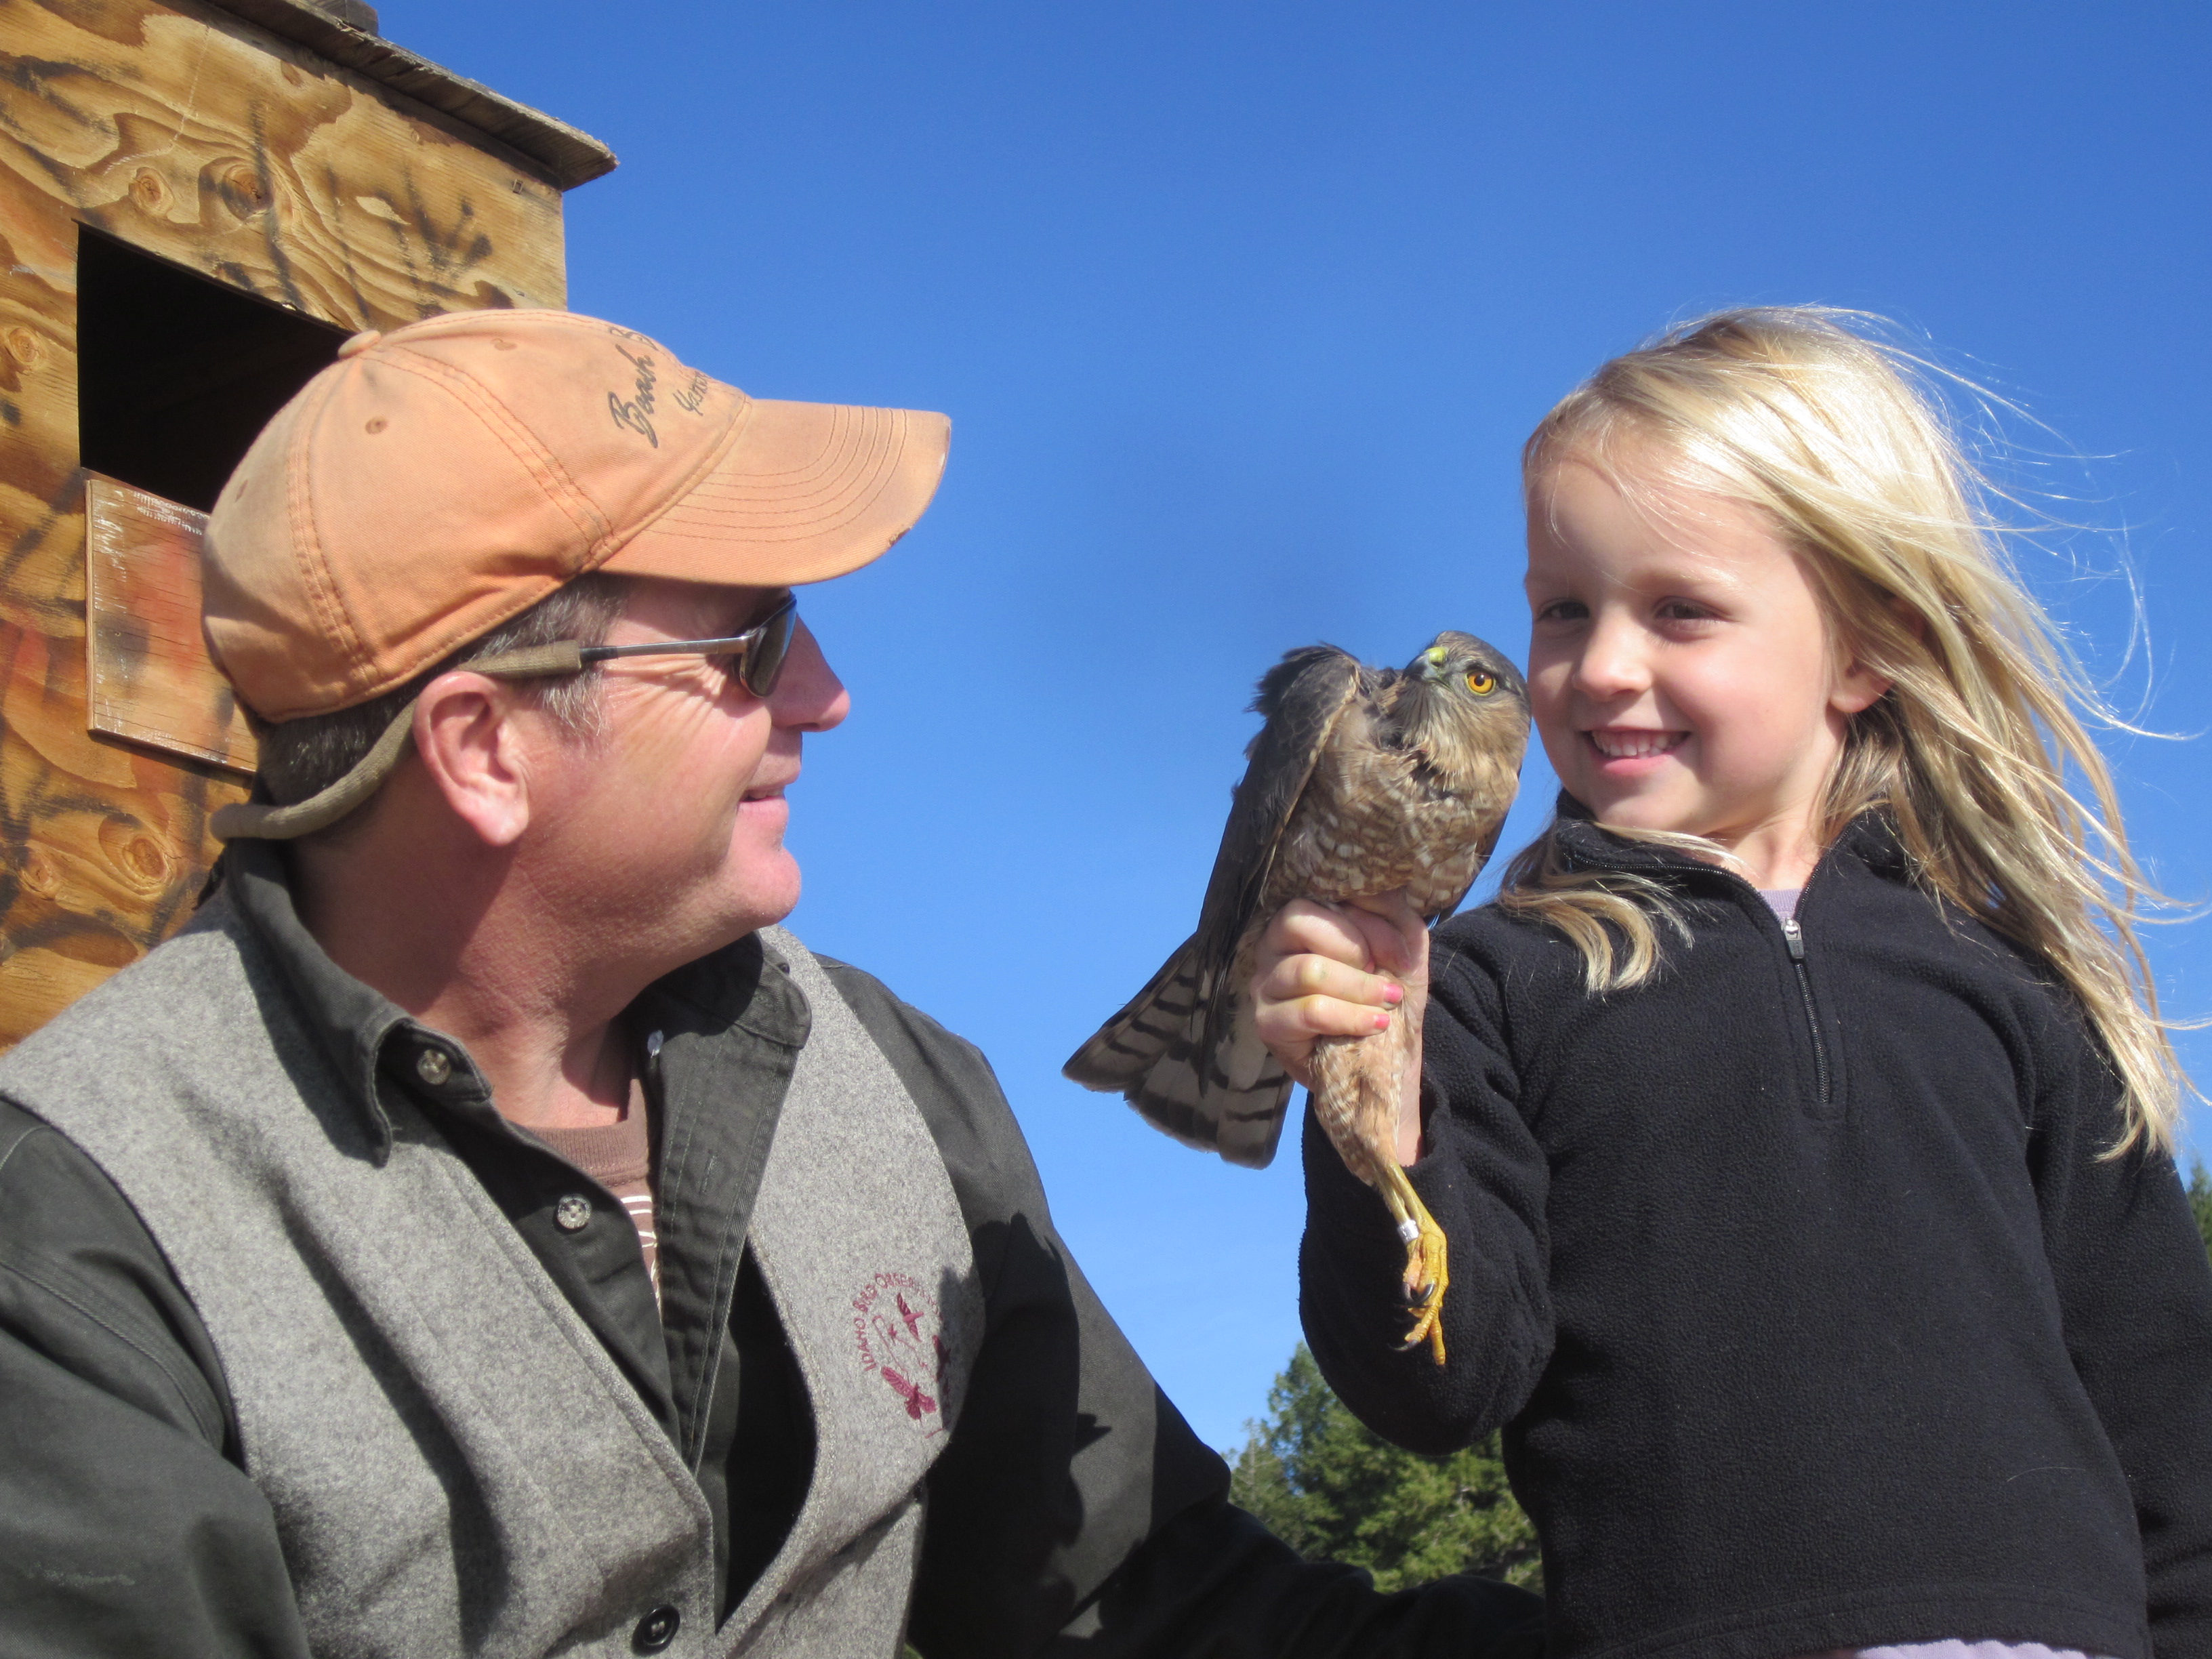 Greg Kaltenecker and child holding a bird